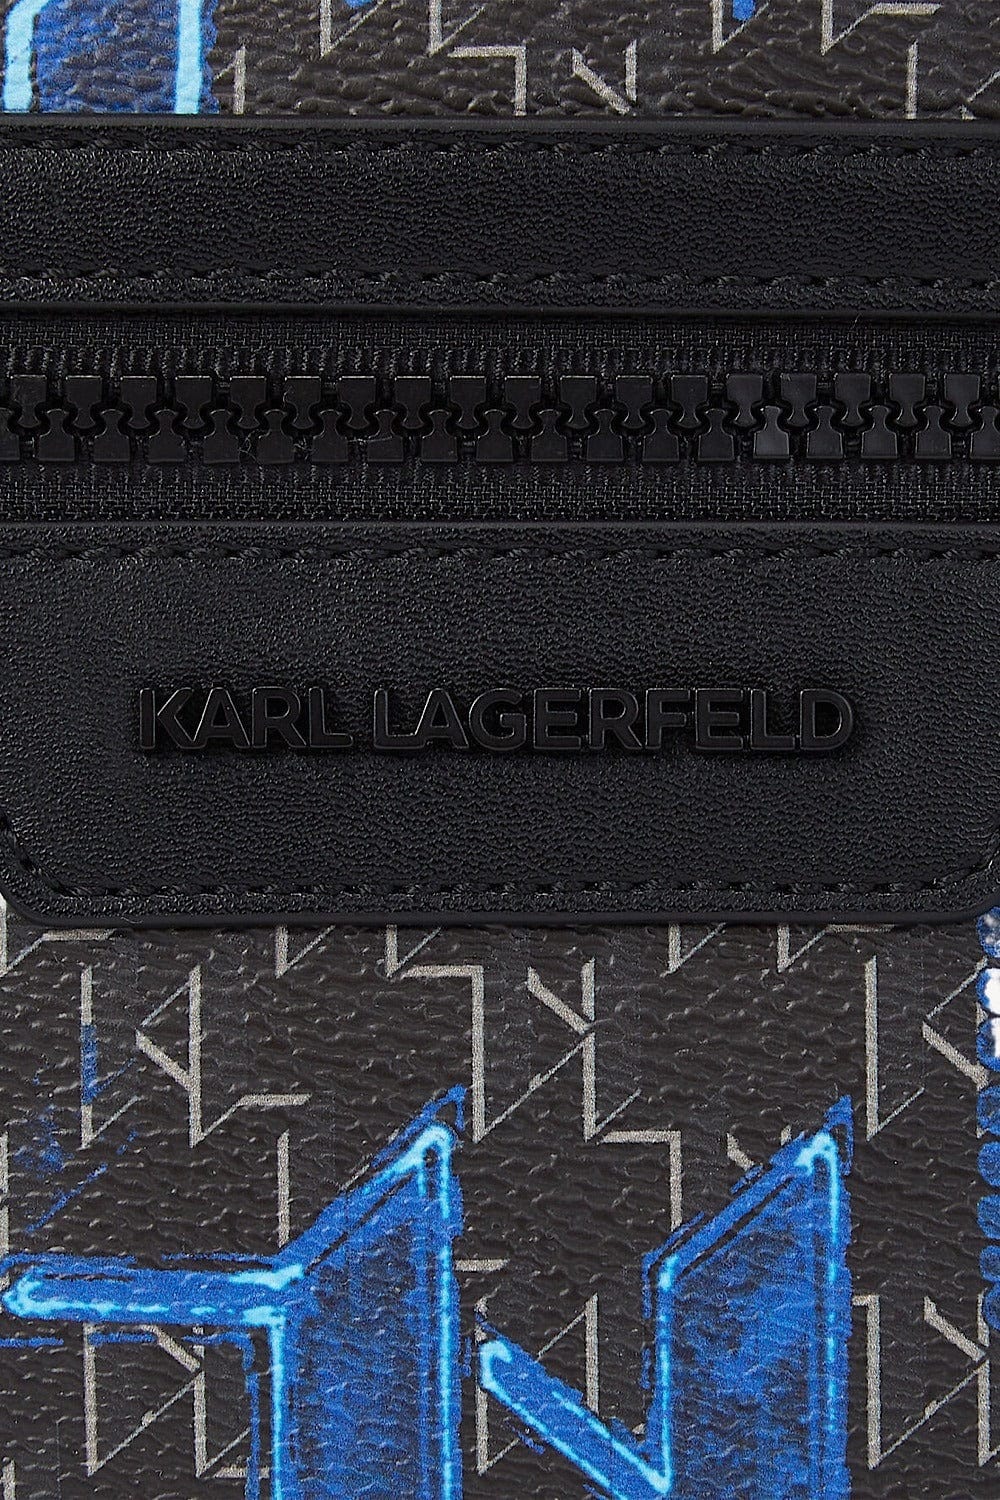 Men's K/MONOGRAM KLASSIK SMALL CROSSBODY BAG by KARL LAGERFELD